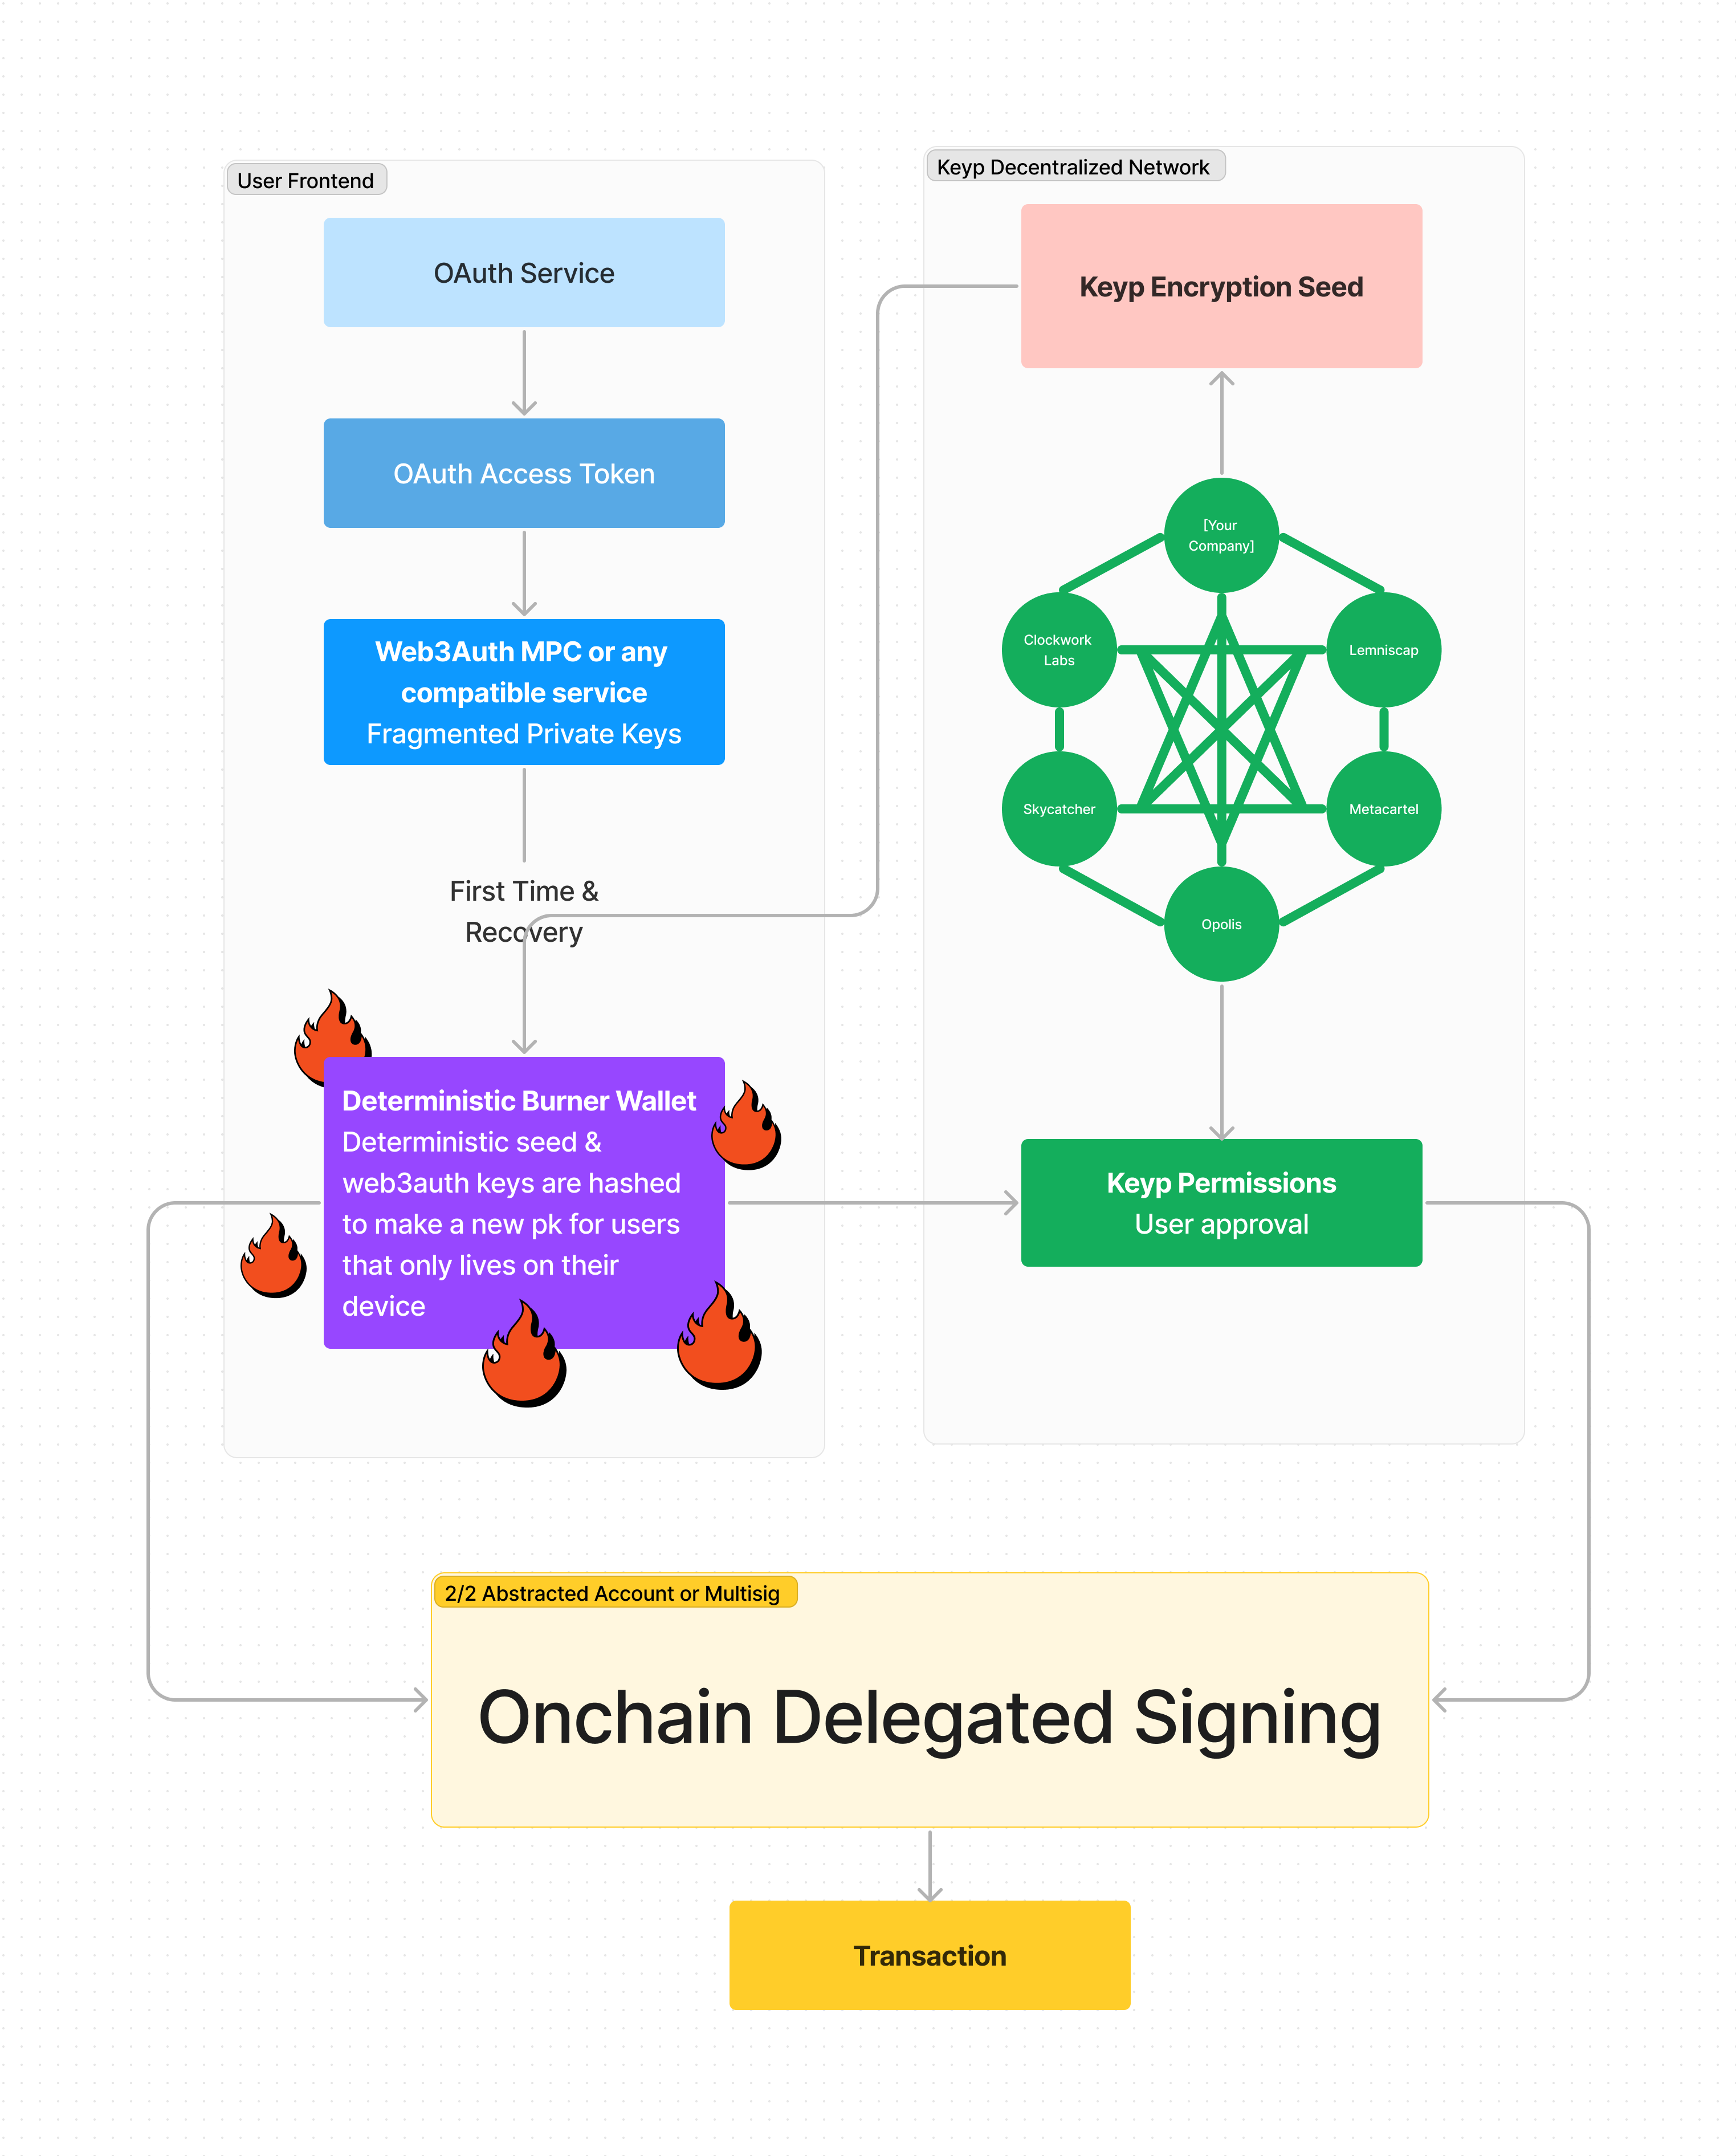 keyp decentralization plan diagram